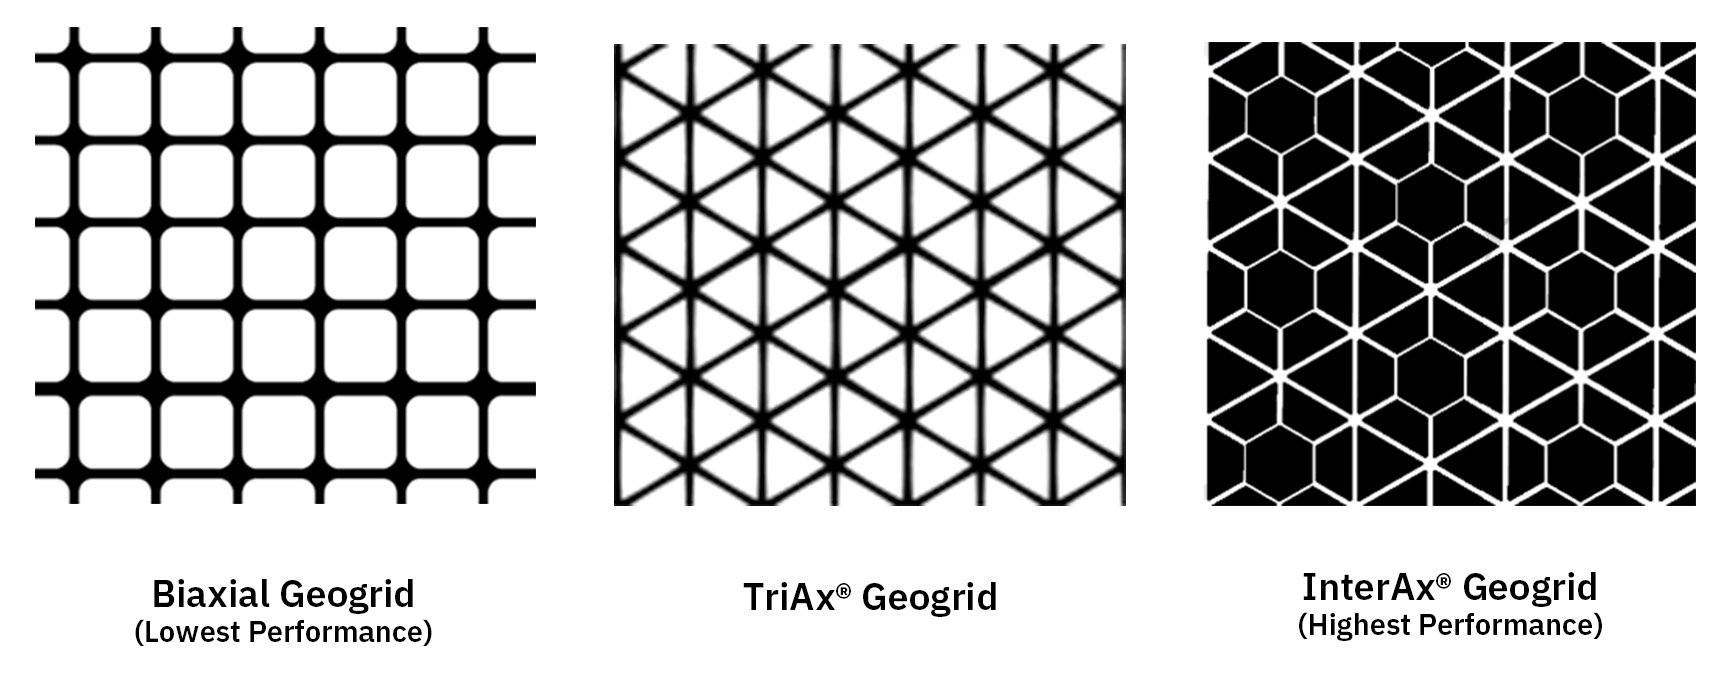 Geogrid-Comparison.jpg